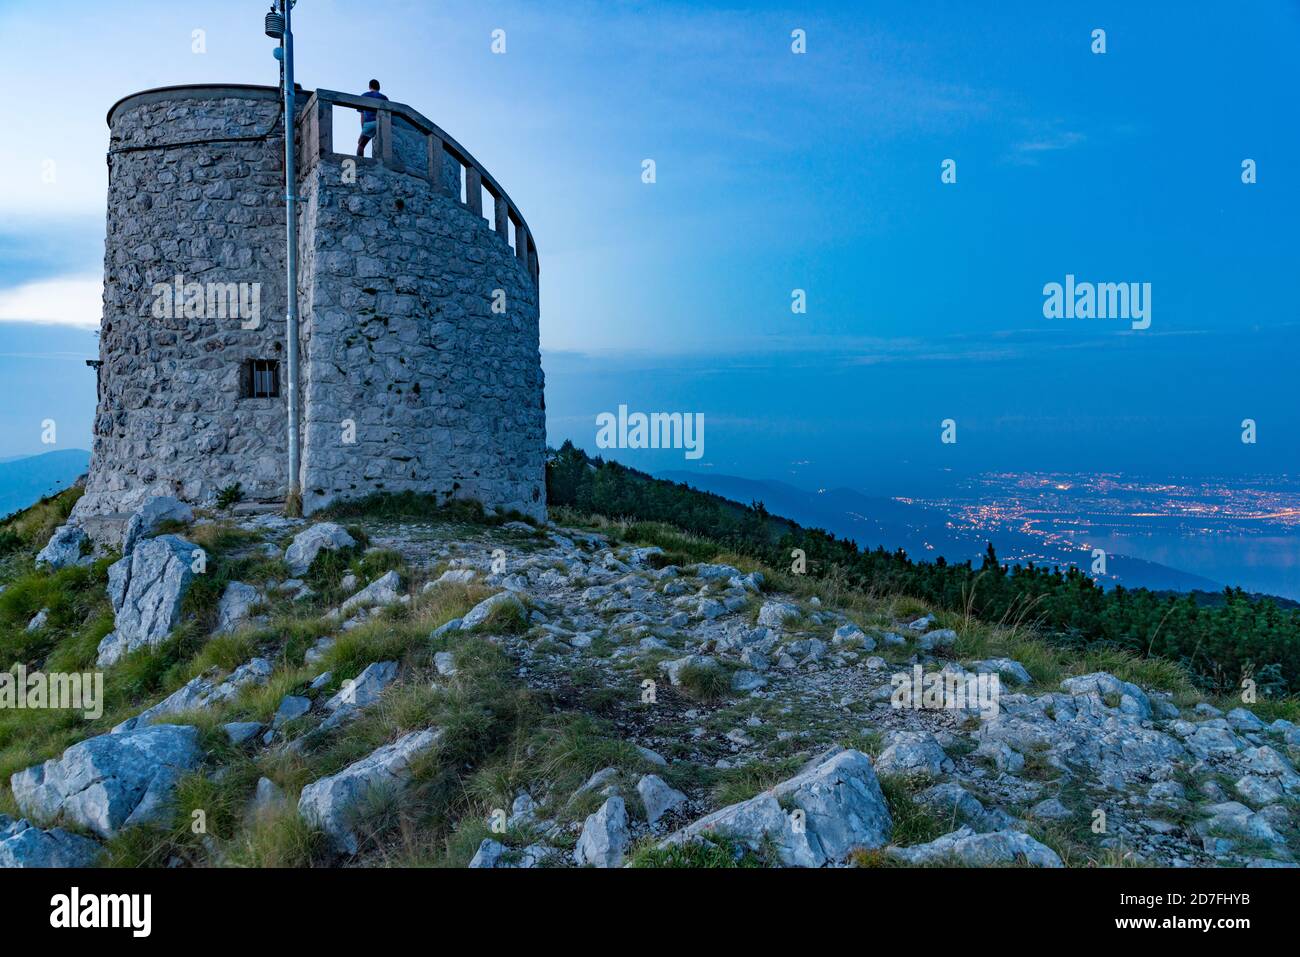 Mount Vojak and tower and Illuminated Rijeka in the background, Istria, Croatia. Stock Photo